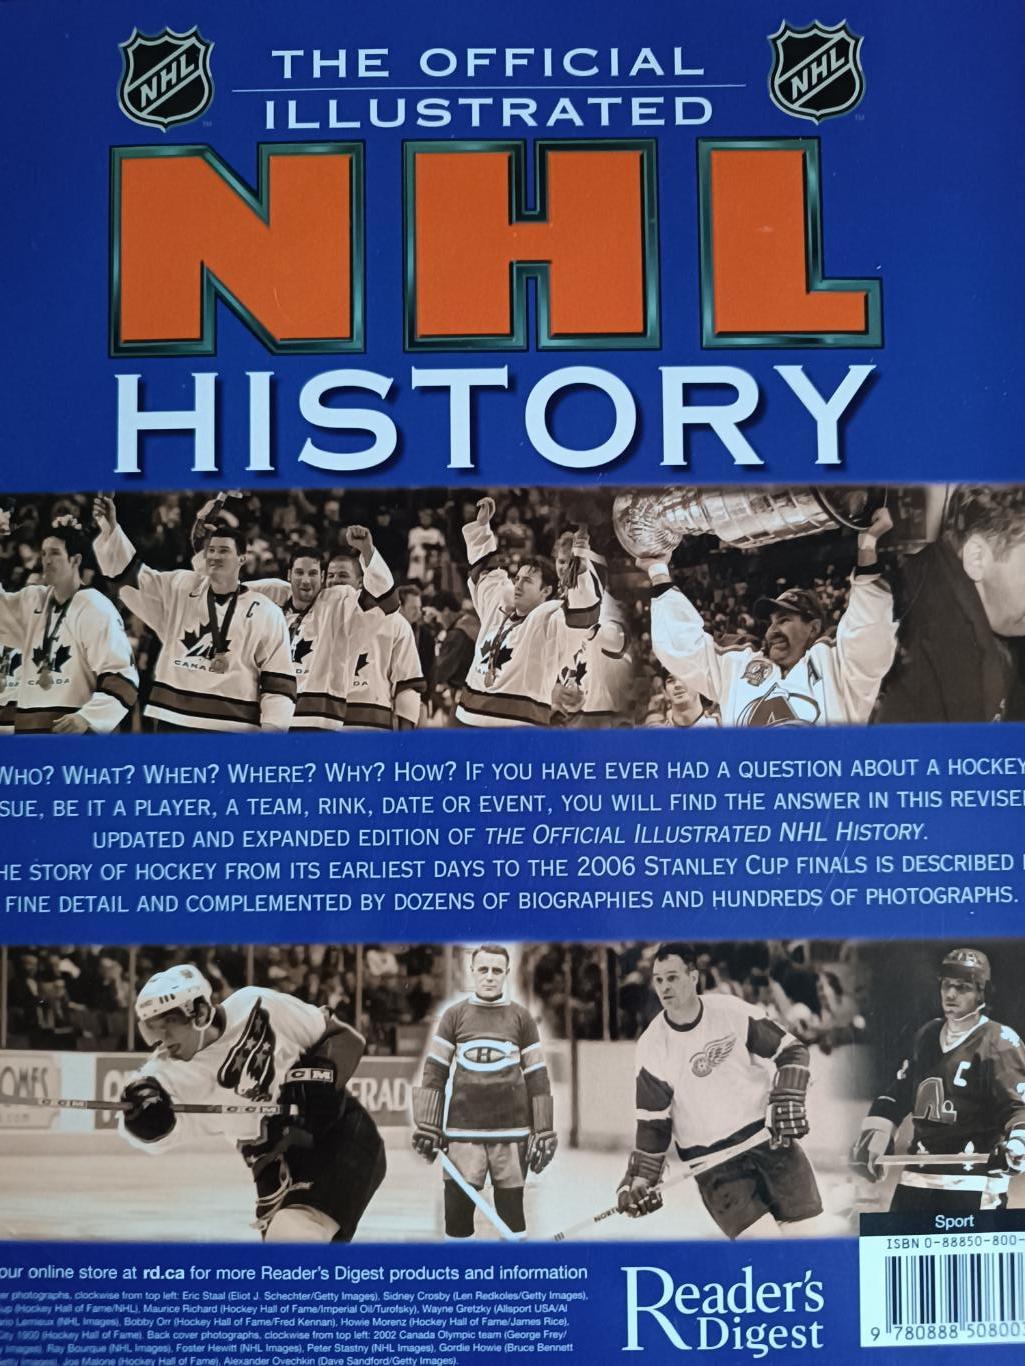 ХОККЕЙ КНИГА ИСТОРИЯ НХЛ 2000 THE OFFICIAL ILLUSTRATED NHL HISTORY BOOK 7